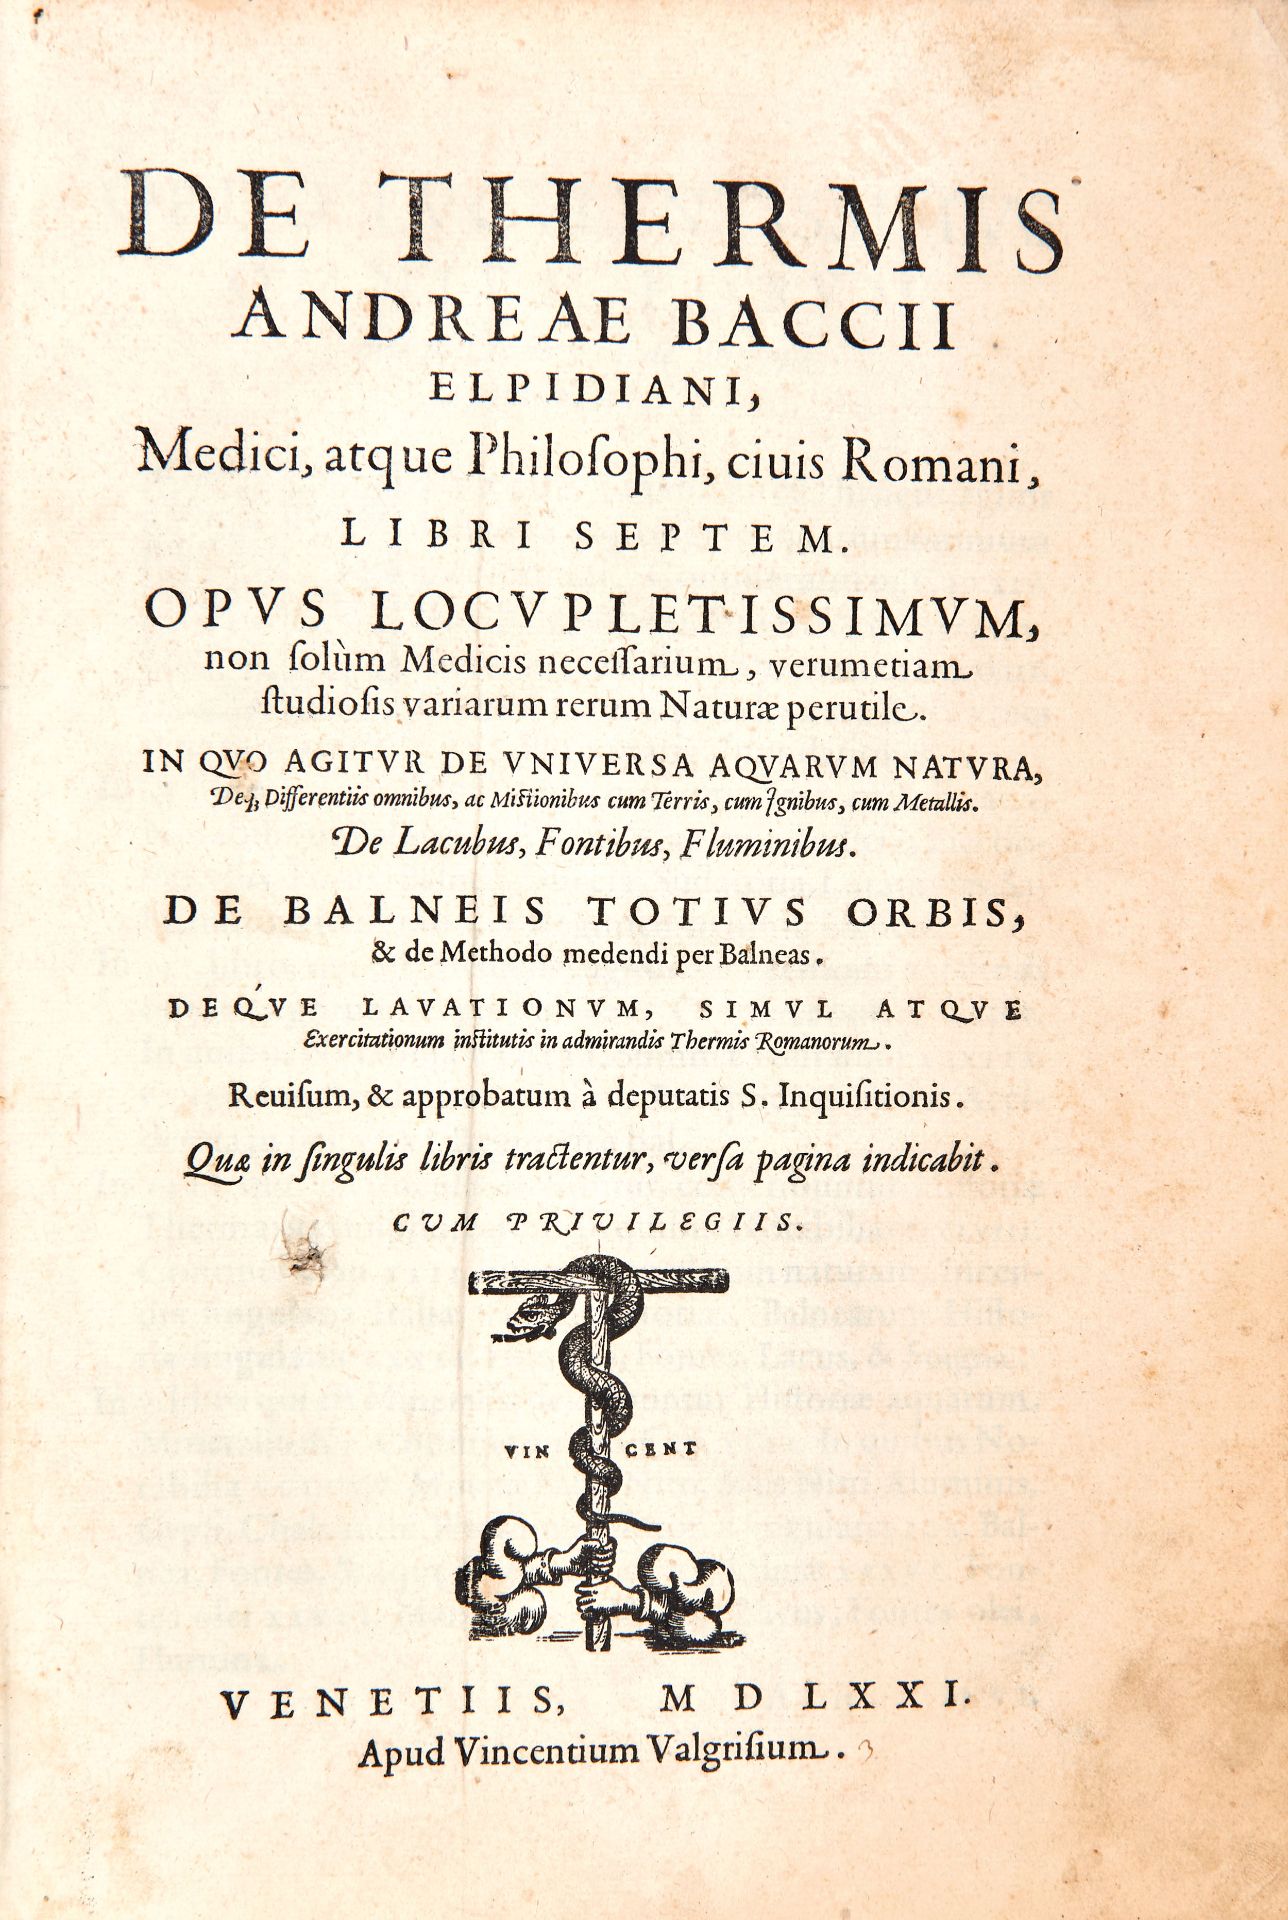 BACCI, Andrea (1524-1600). De Thermis...in quo agitur de universa acquarum natura. Venice: